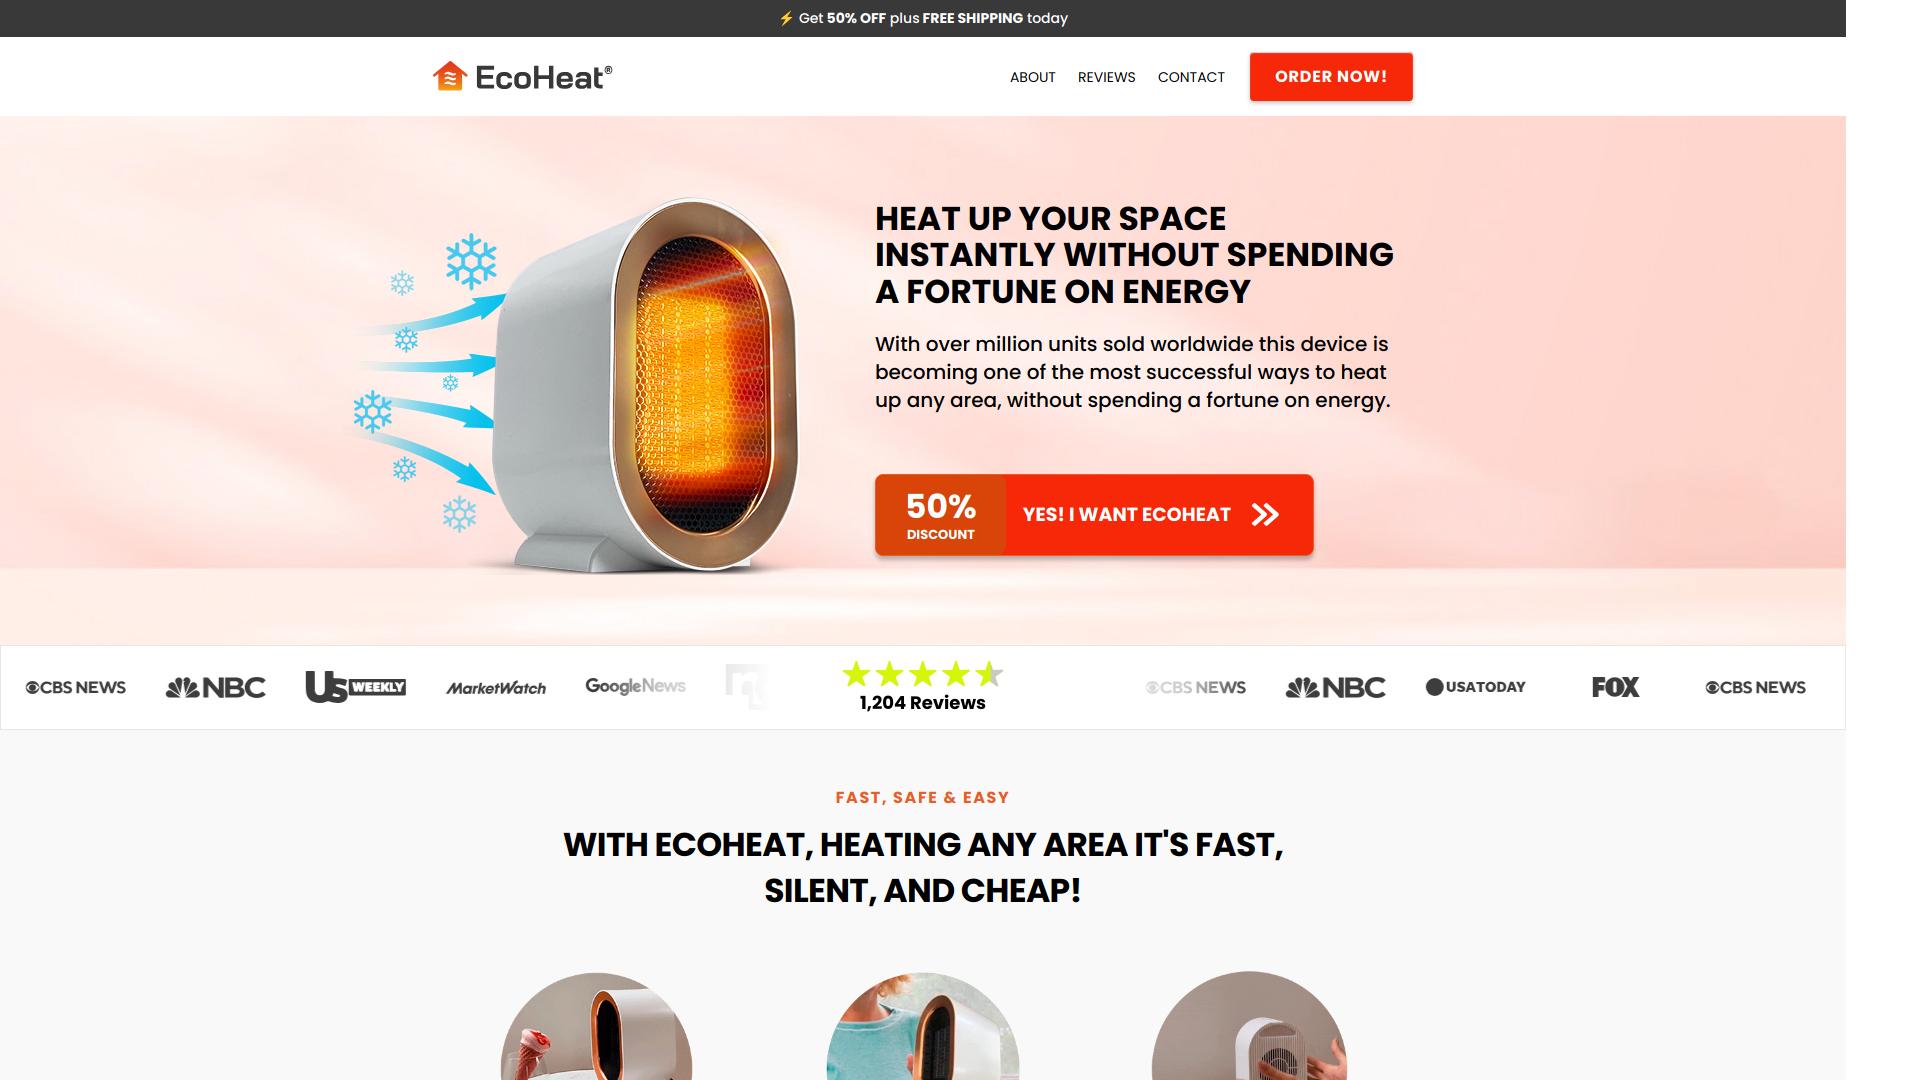 Ecoheat - Eco Heat at shopecoheat.co